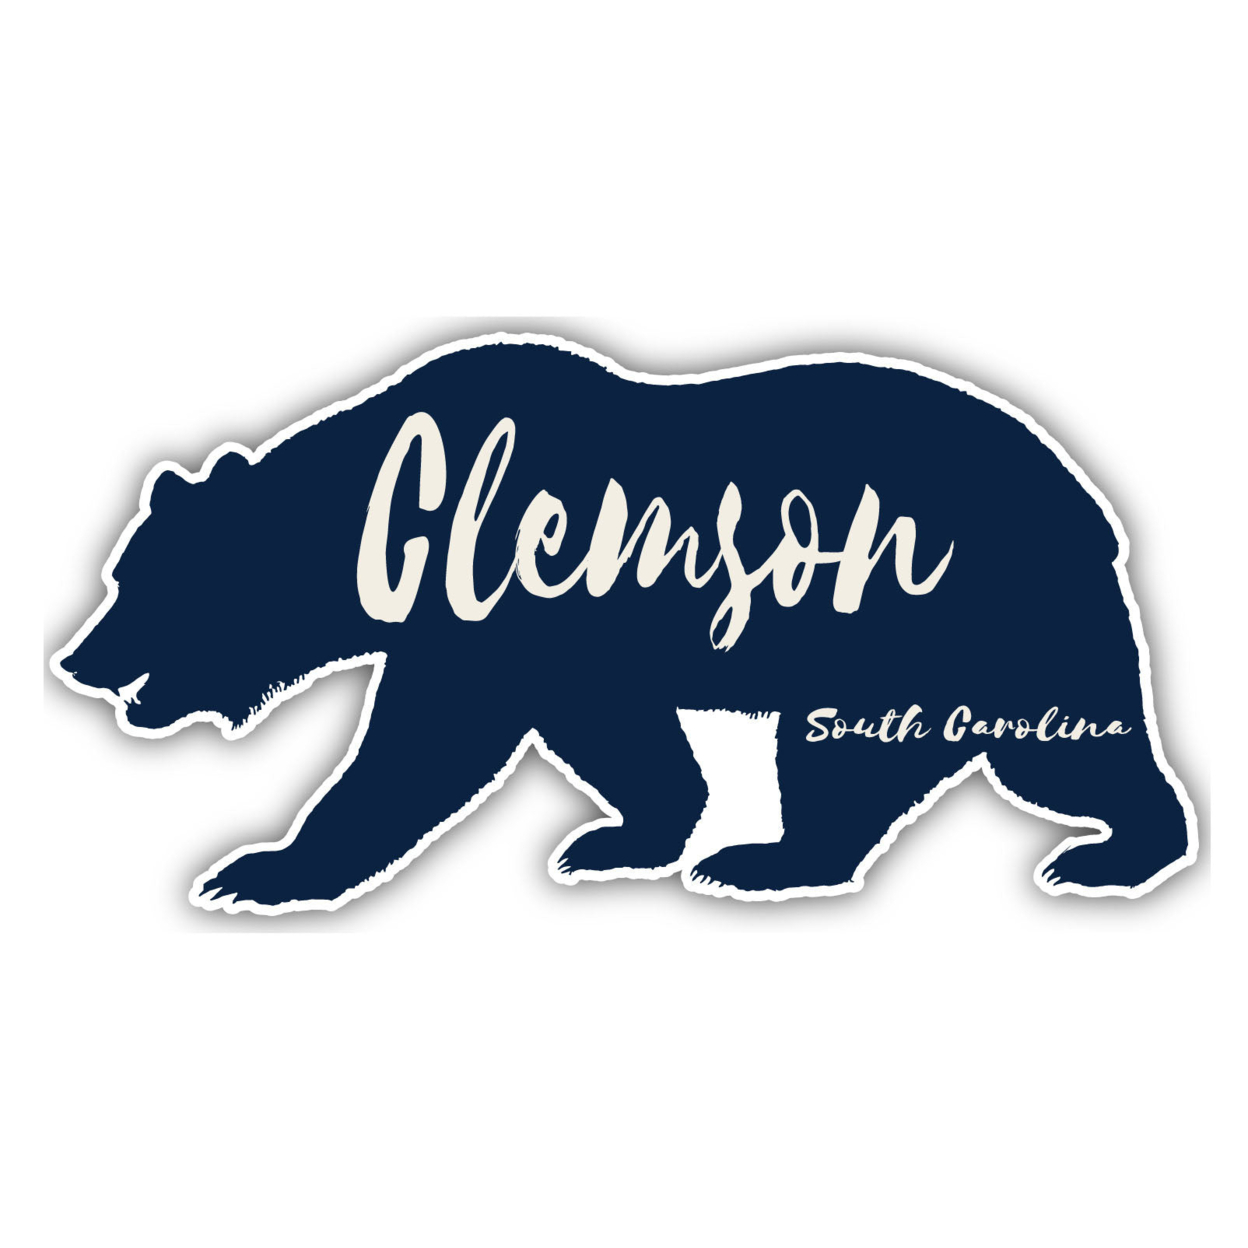 Clemson South Carolina Souvenir Decorative Stickers (Choose Theme And Size) - 4-Pack, 8-Inch, Bear